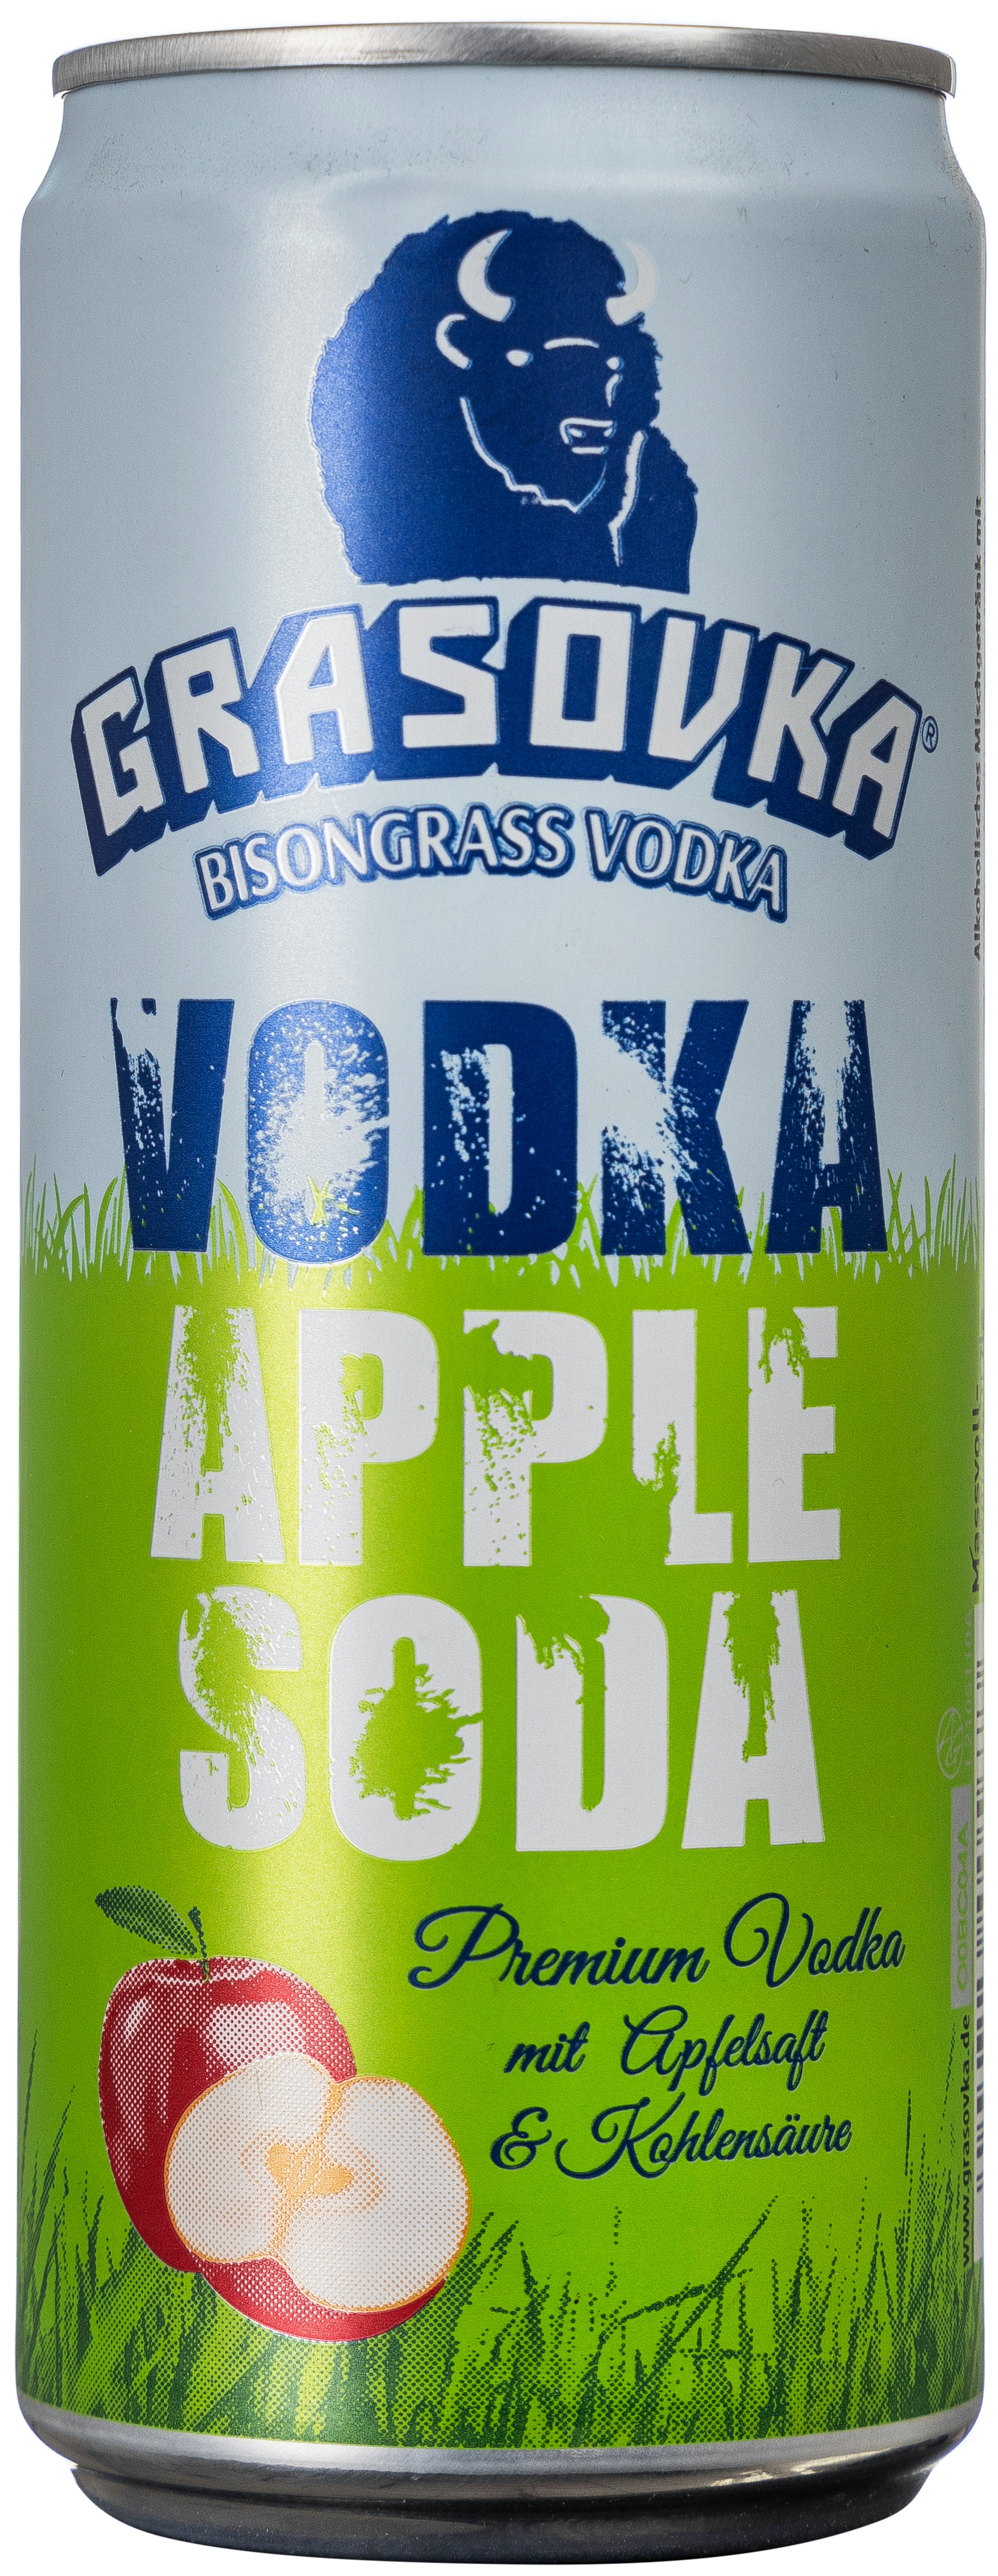 Grasovka Bisongrass Vodka Apple Soda 10 % vol. 0,33L EINWEG